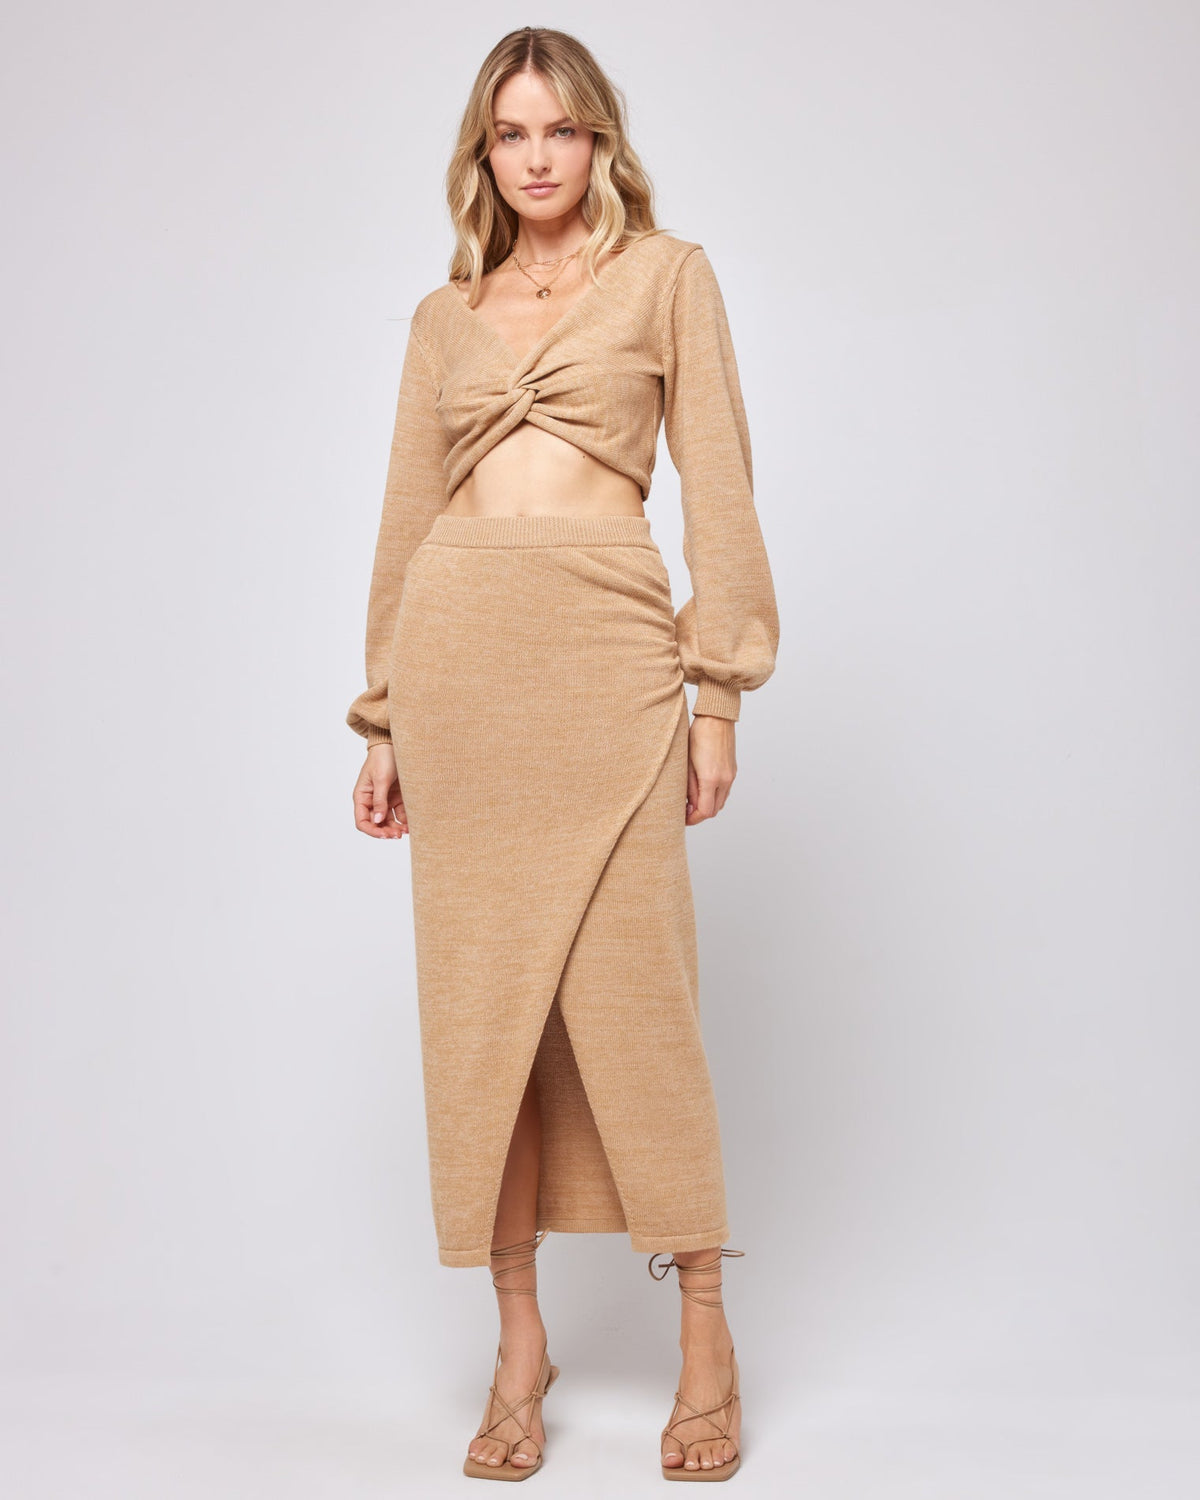 Siren Sweater - Camel Camel | Model: Lura (size: S) | Hover